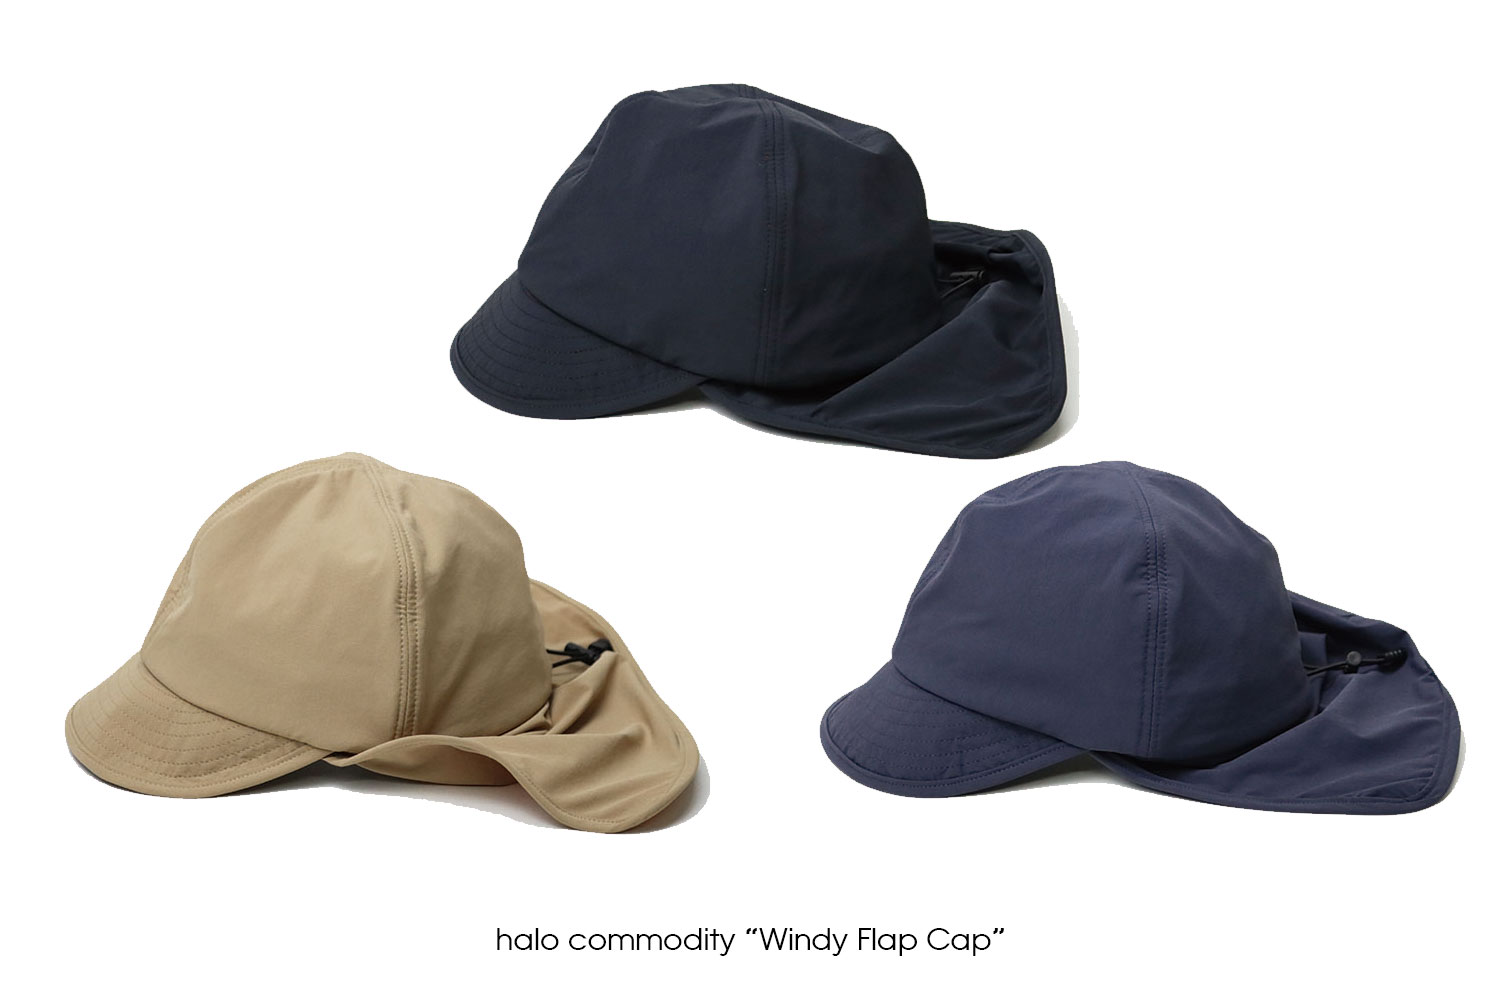 halo commodity "Windy Flap Cap"